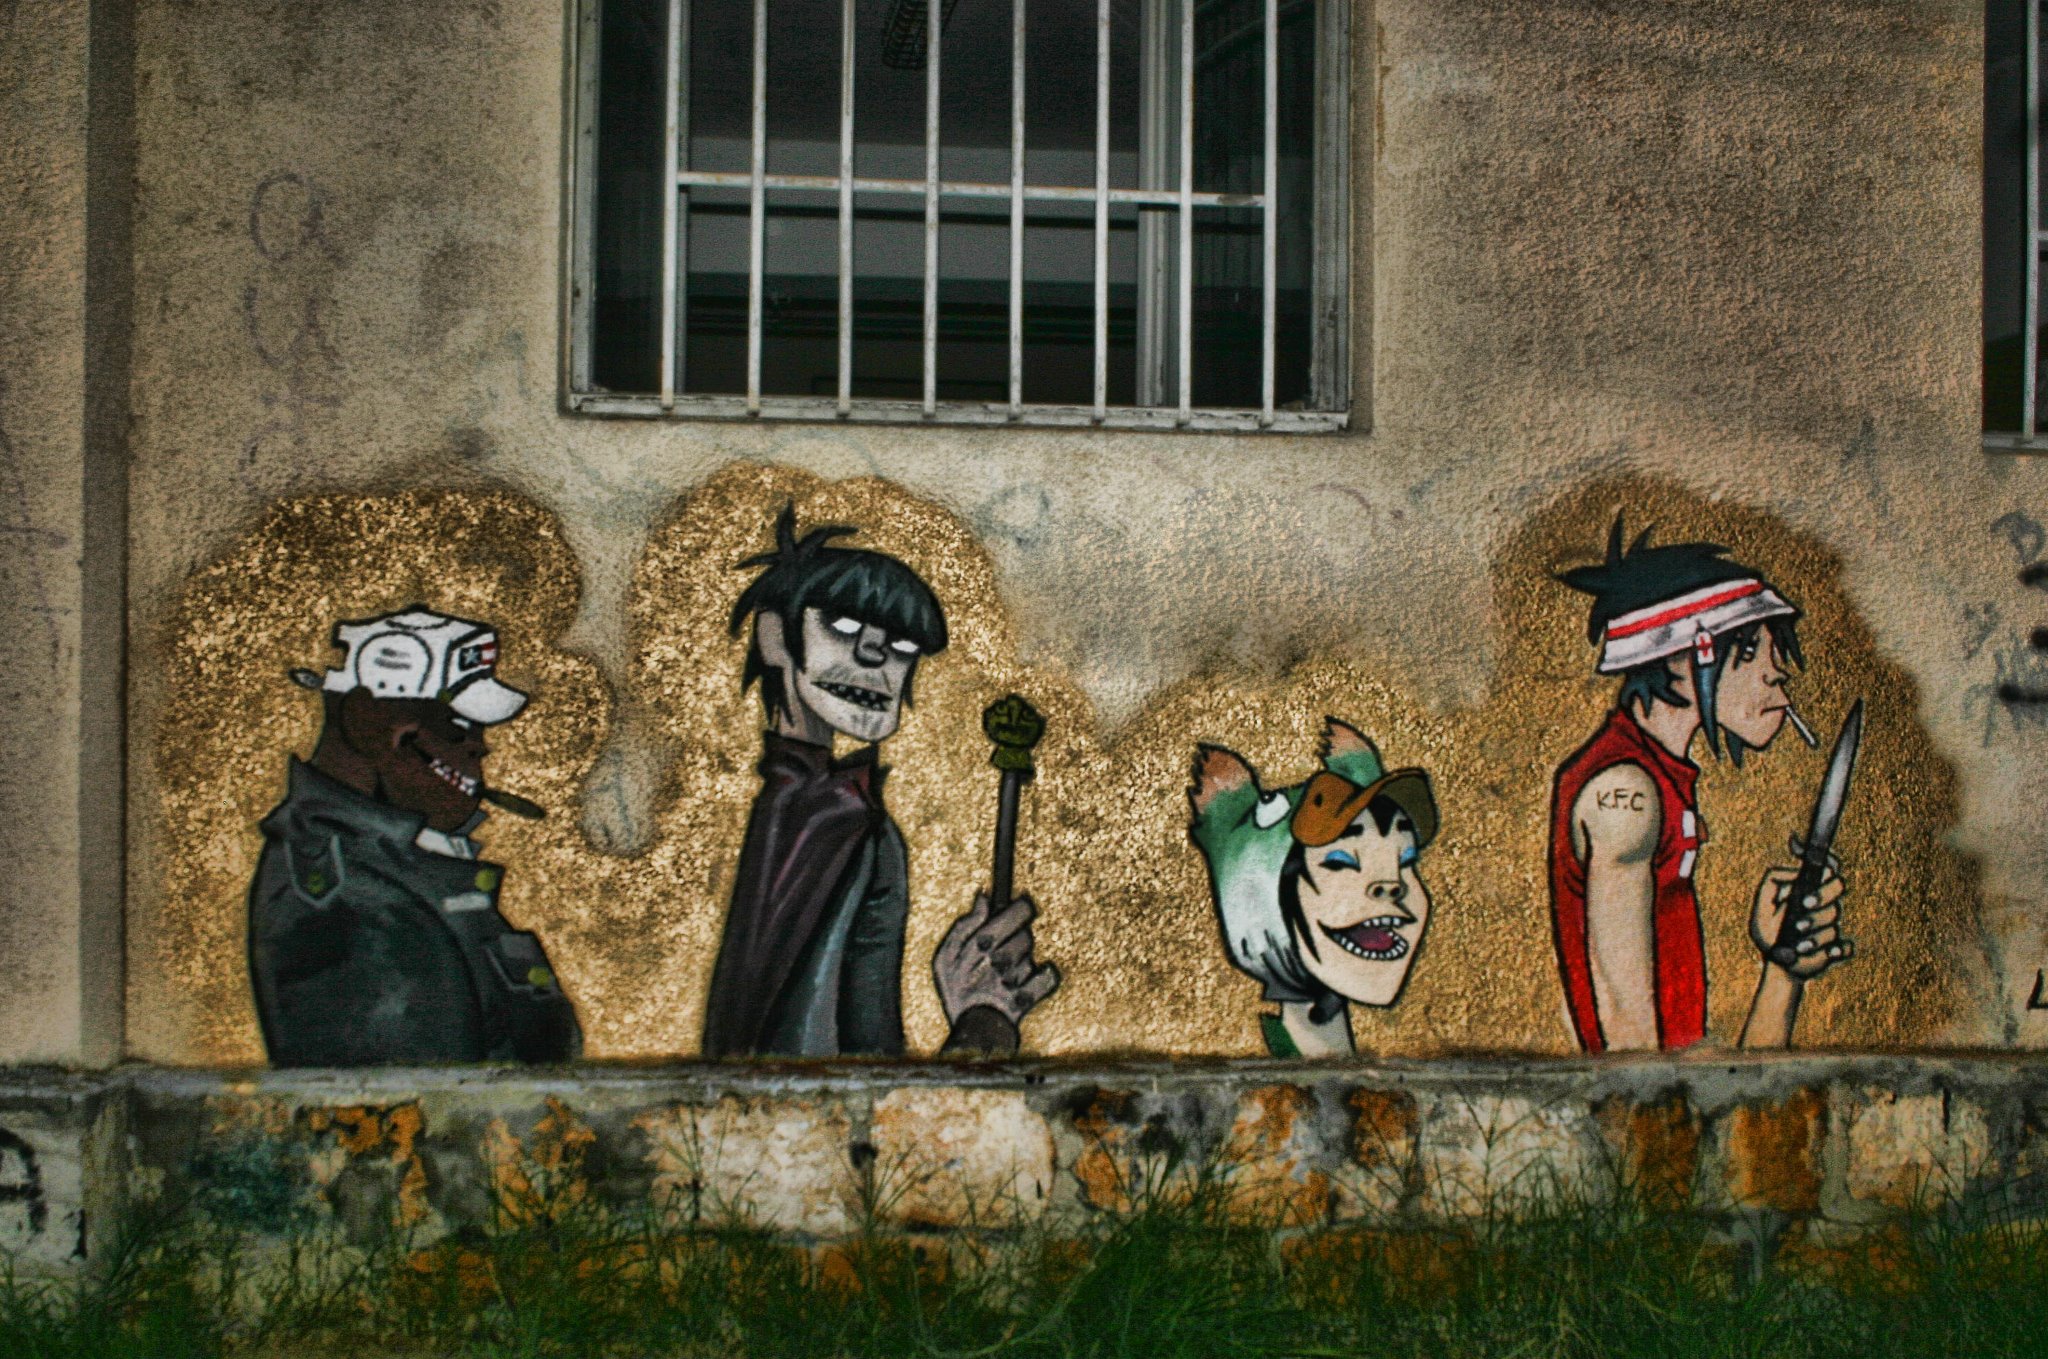 Gorillaz – Street Art in Kragujevac, Serbia